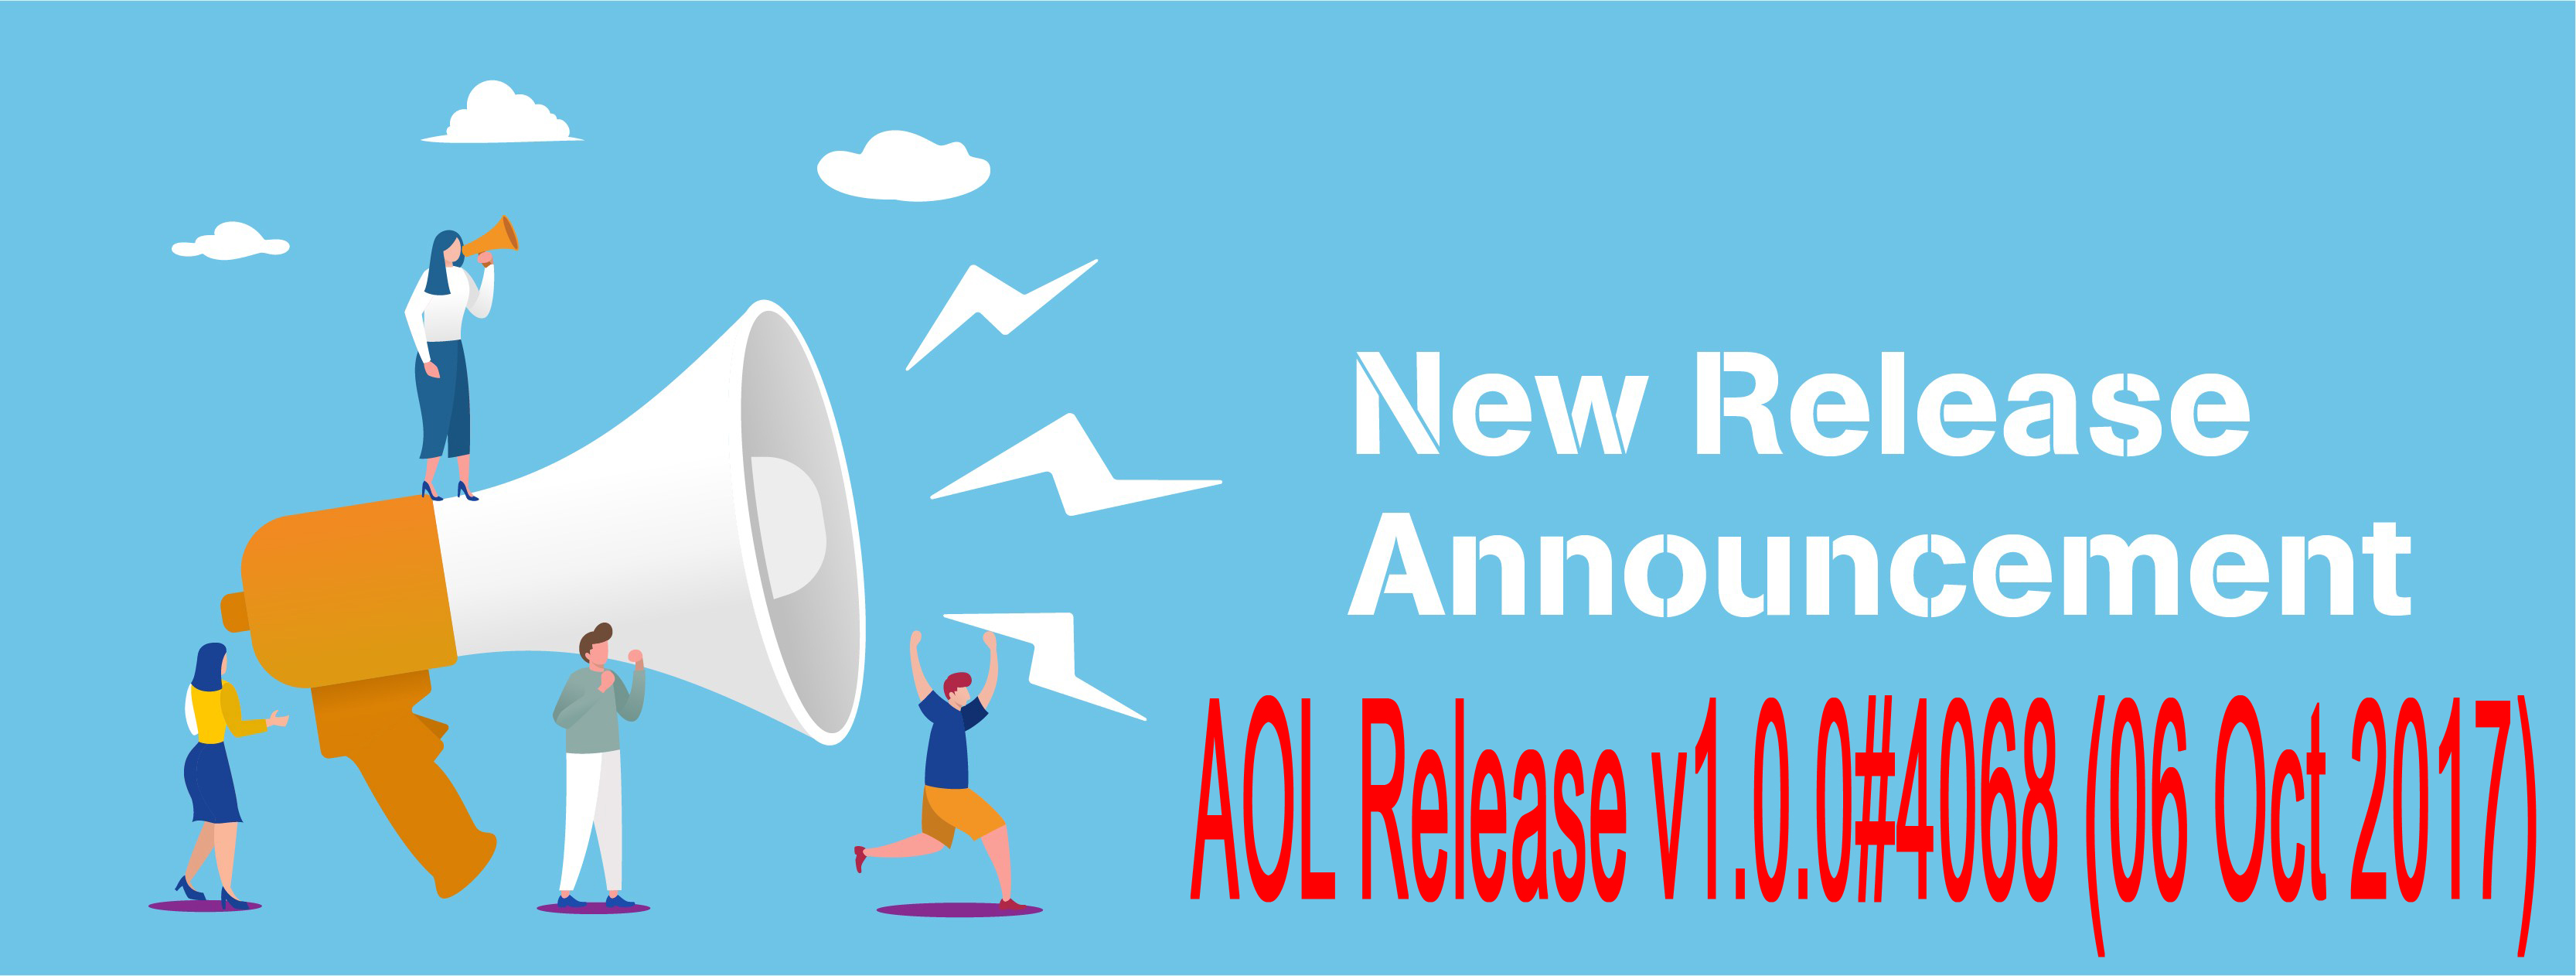 Release v1.0.0#4068 (06 Oct 2017)